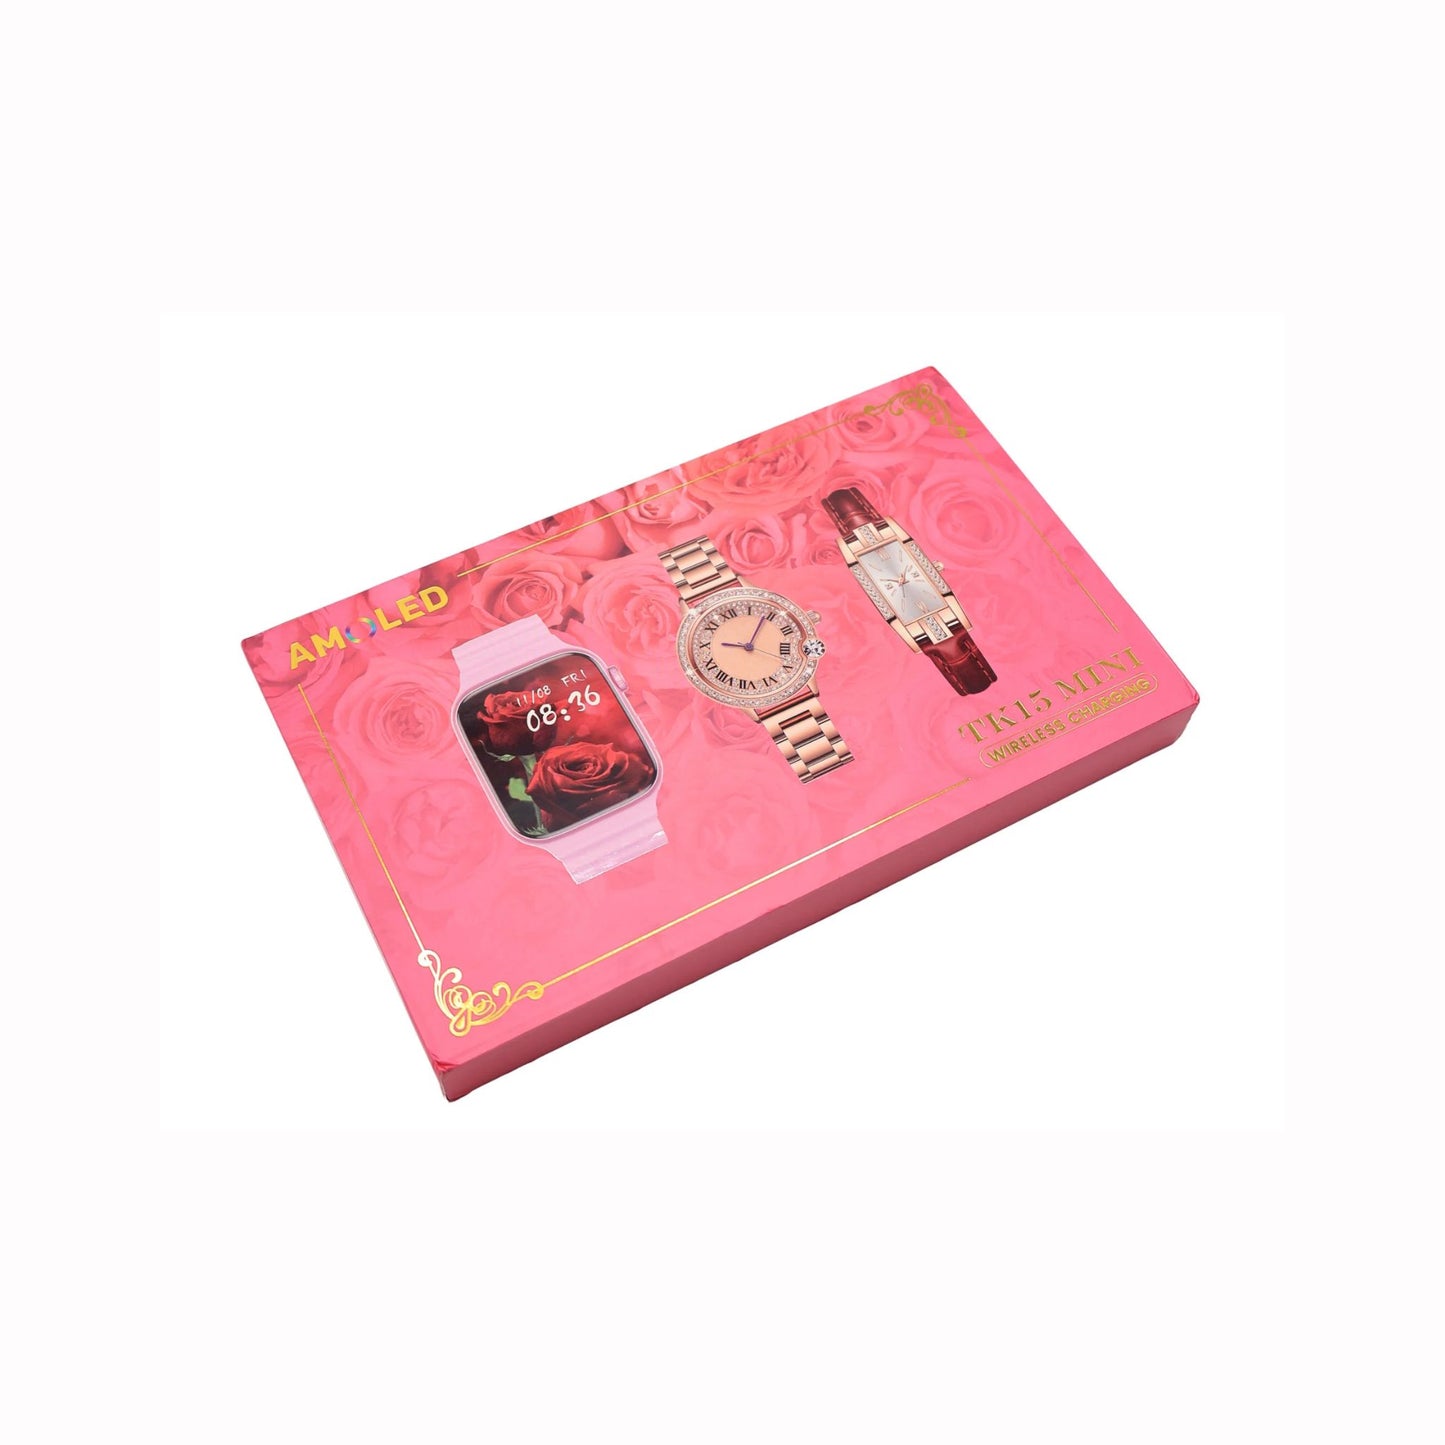 High End TK15 Mini Amoled Smartwatch_Pink